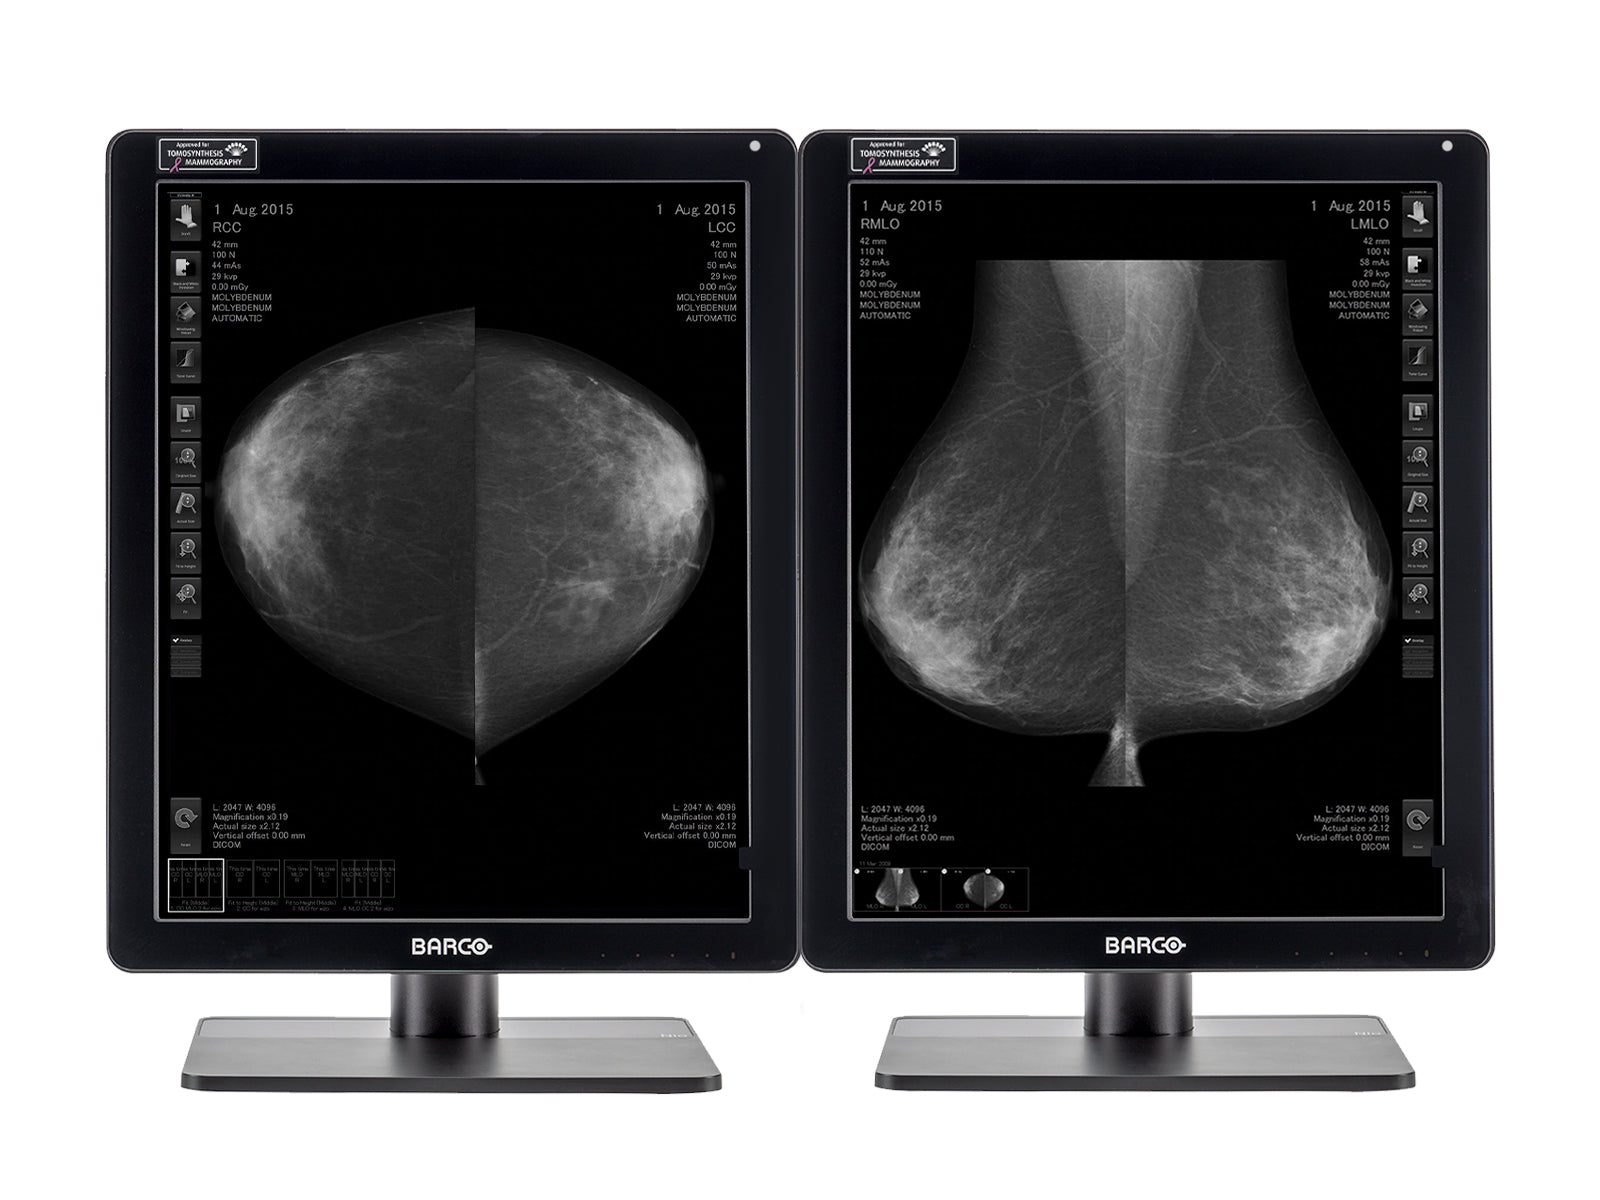 Barco Nio MDNG-6221 Pantalla de imágenes de senos mamo 5D-DBT LED en escala de grises de 21MP y 3" (K9300372B)